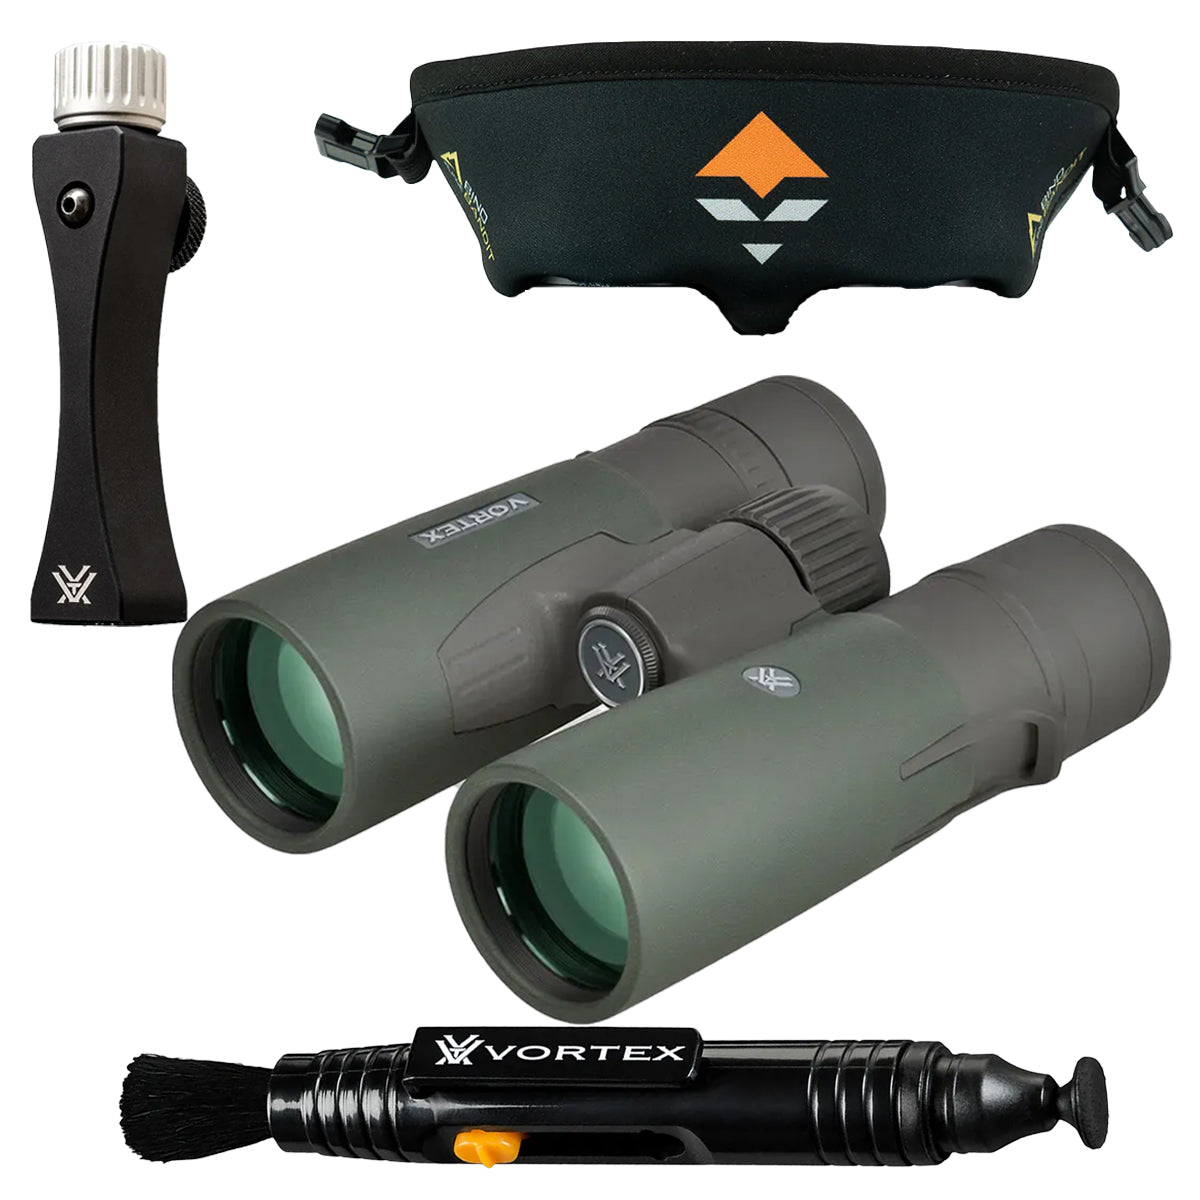 Vortex Binocular Package in  by GOHUNT | GOHUNT Shop - GOHUNT Shop